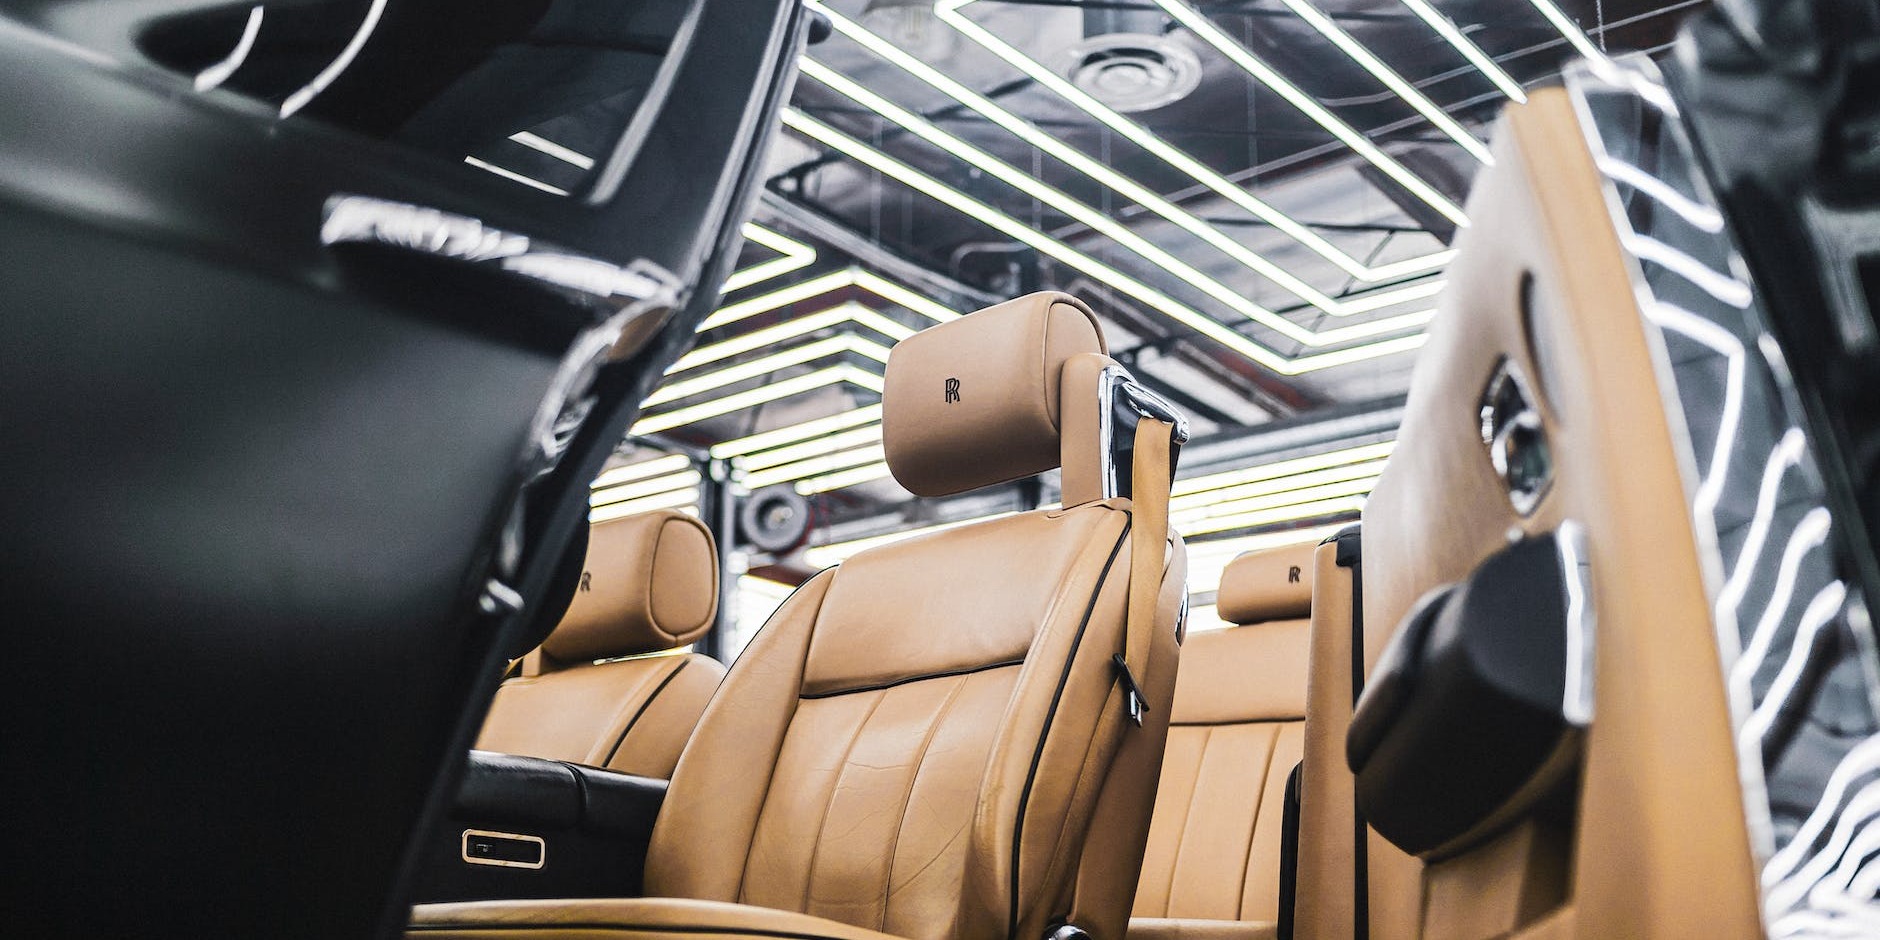 Rolls Royce Cullinan vs. Bentley Bentayga: Comparing Ultra-Luxury SUVs